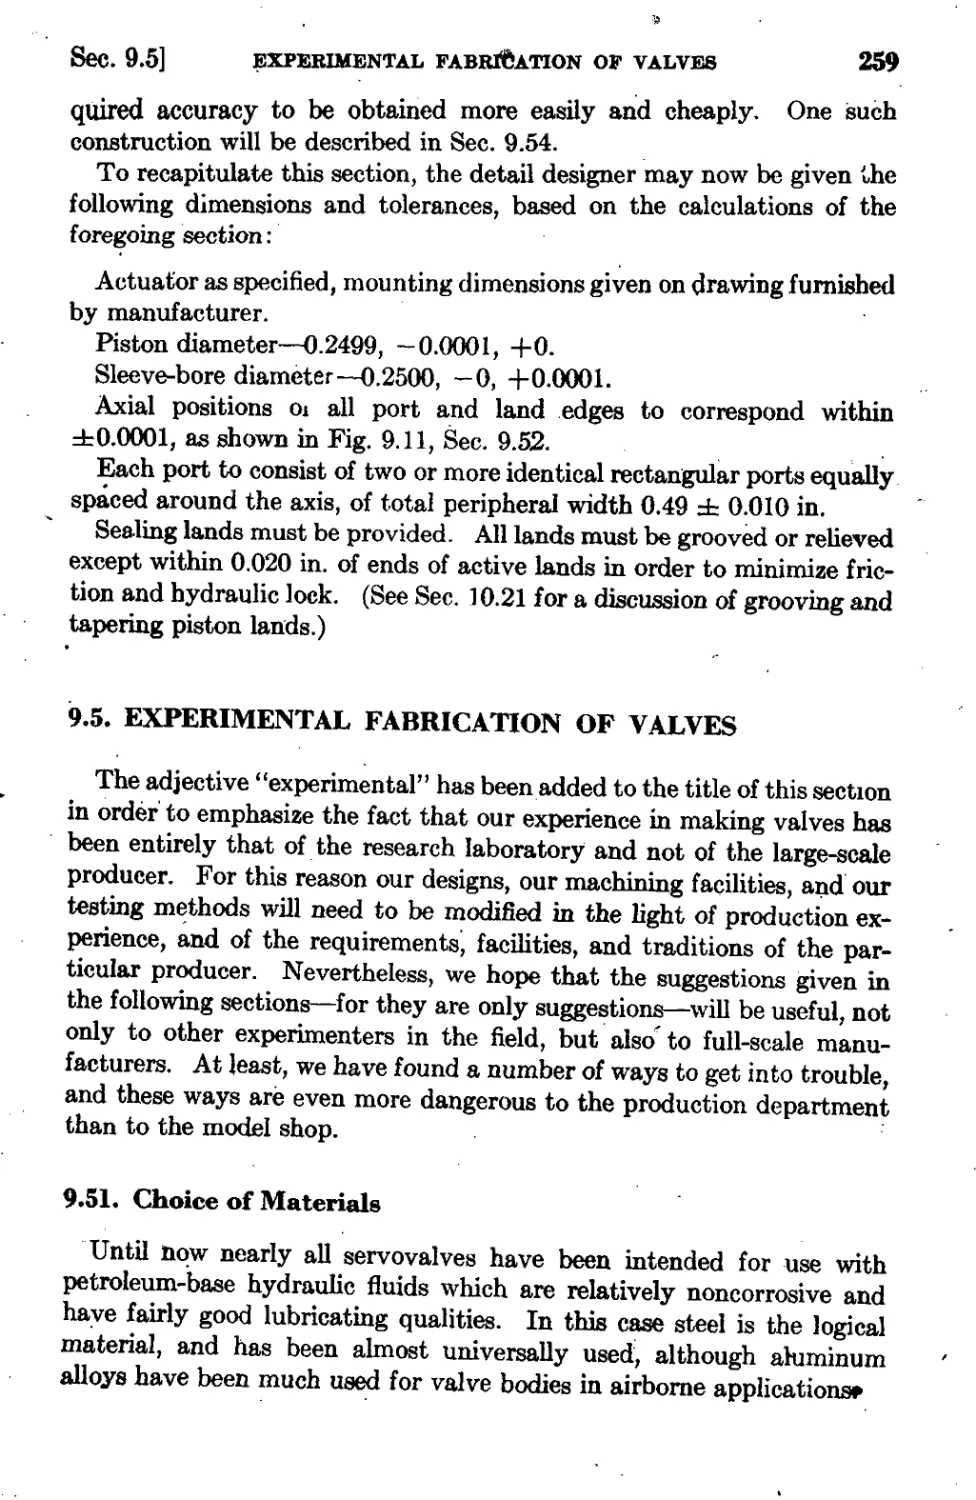 9.5 Experimental Fabrication of Valves